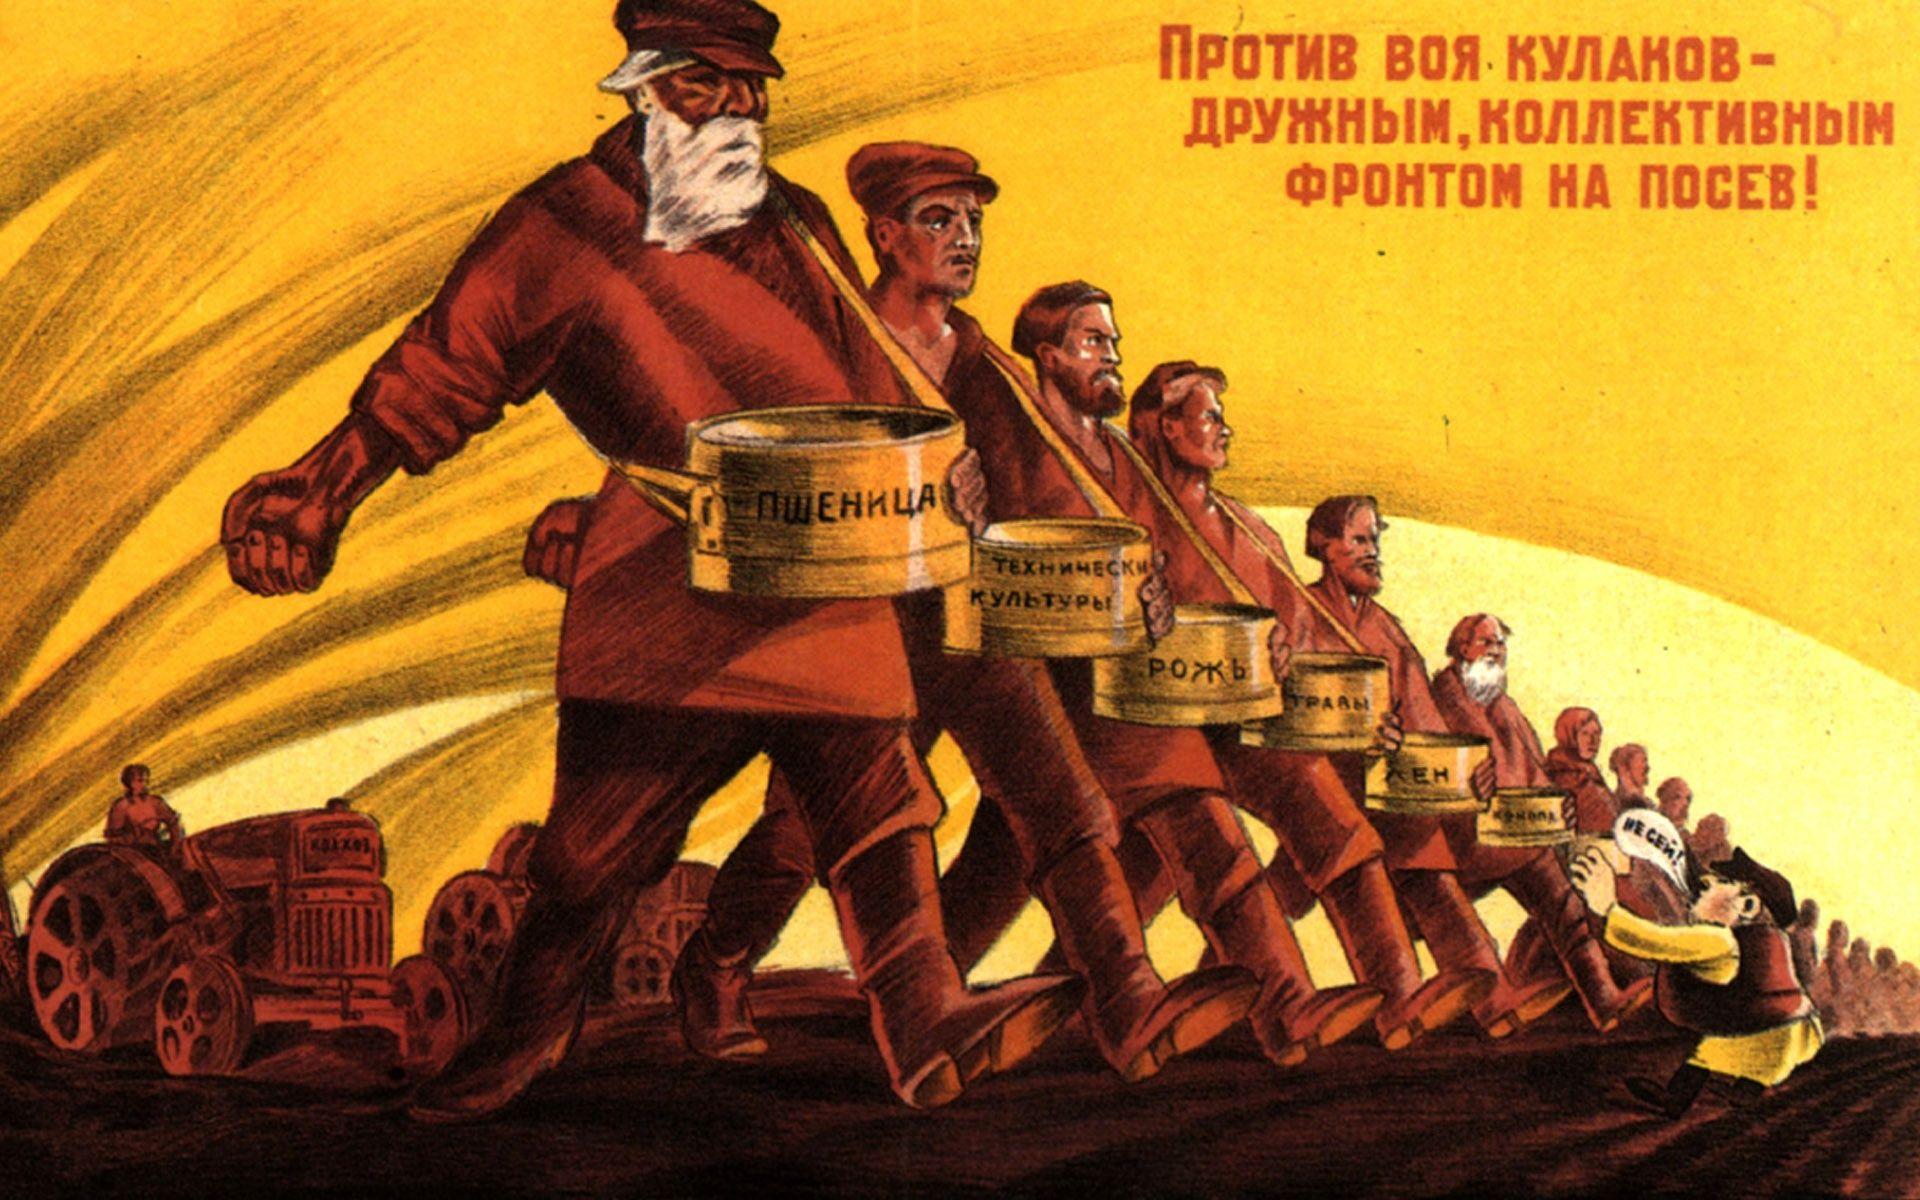 Soviet Union propaganda